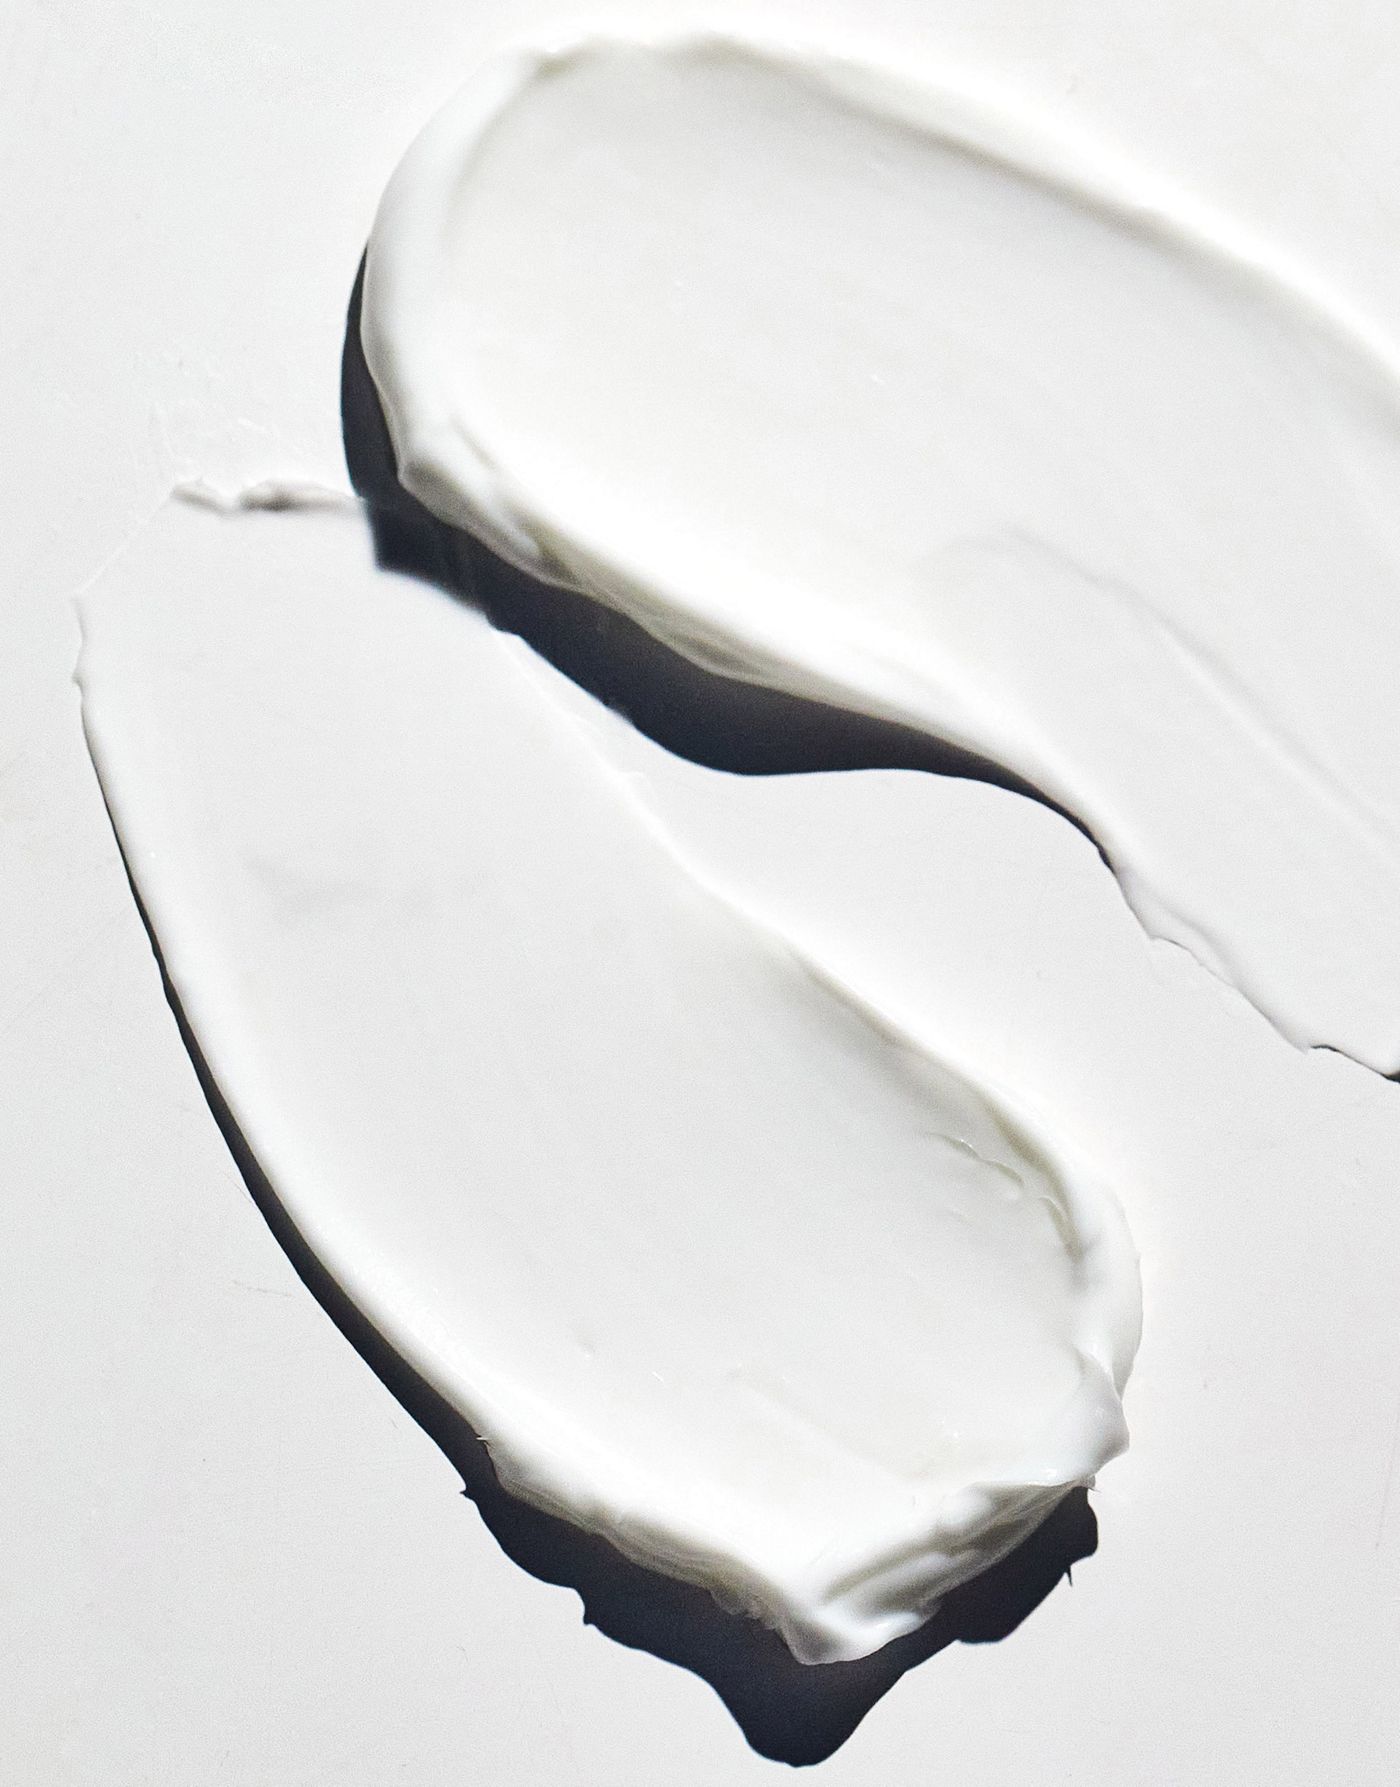 Elemis Pro-Radiance Cream Cleanser 30ml